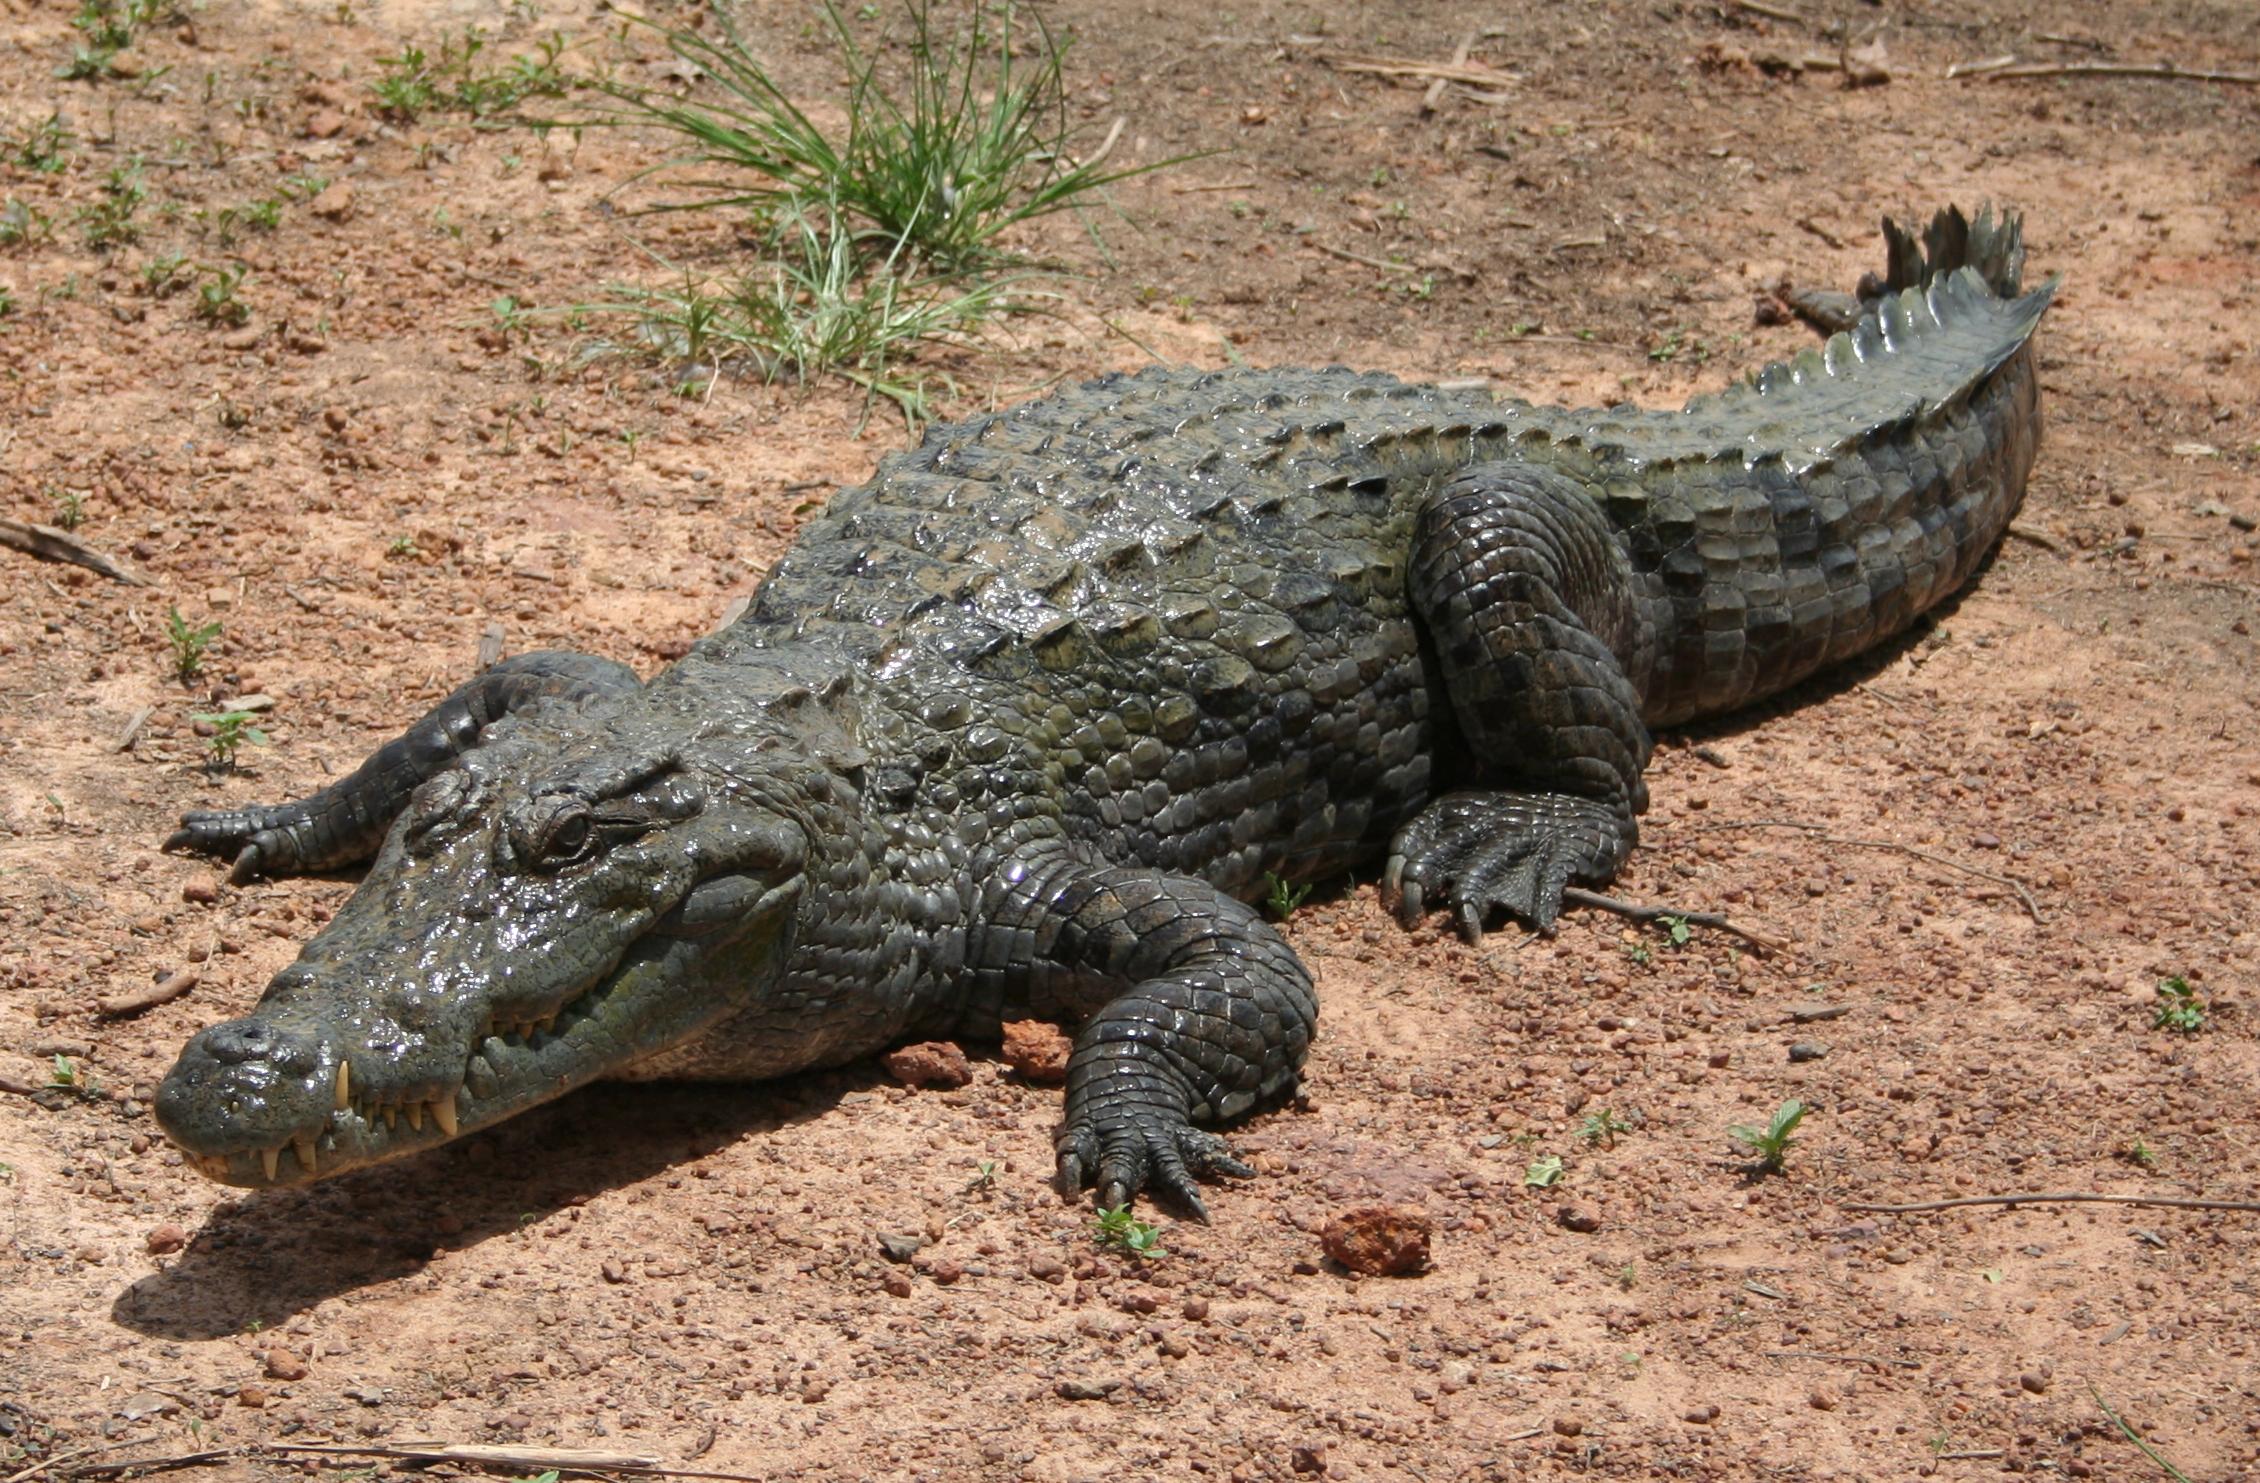 A dark green scaled crocodile lies on dry ground.